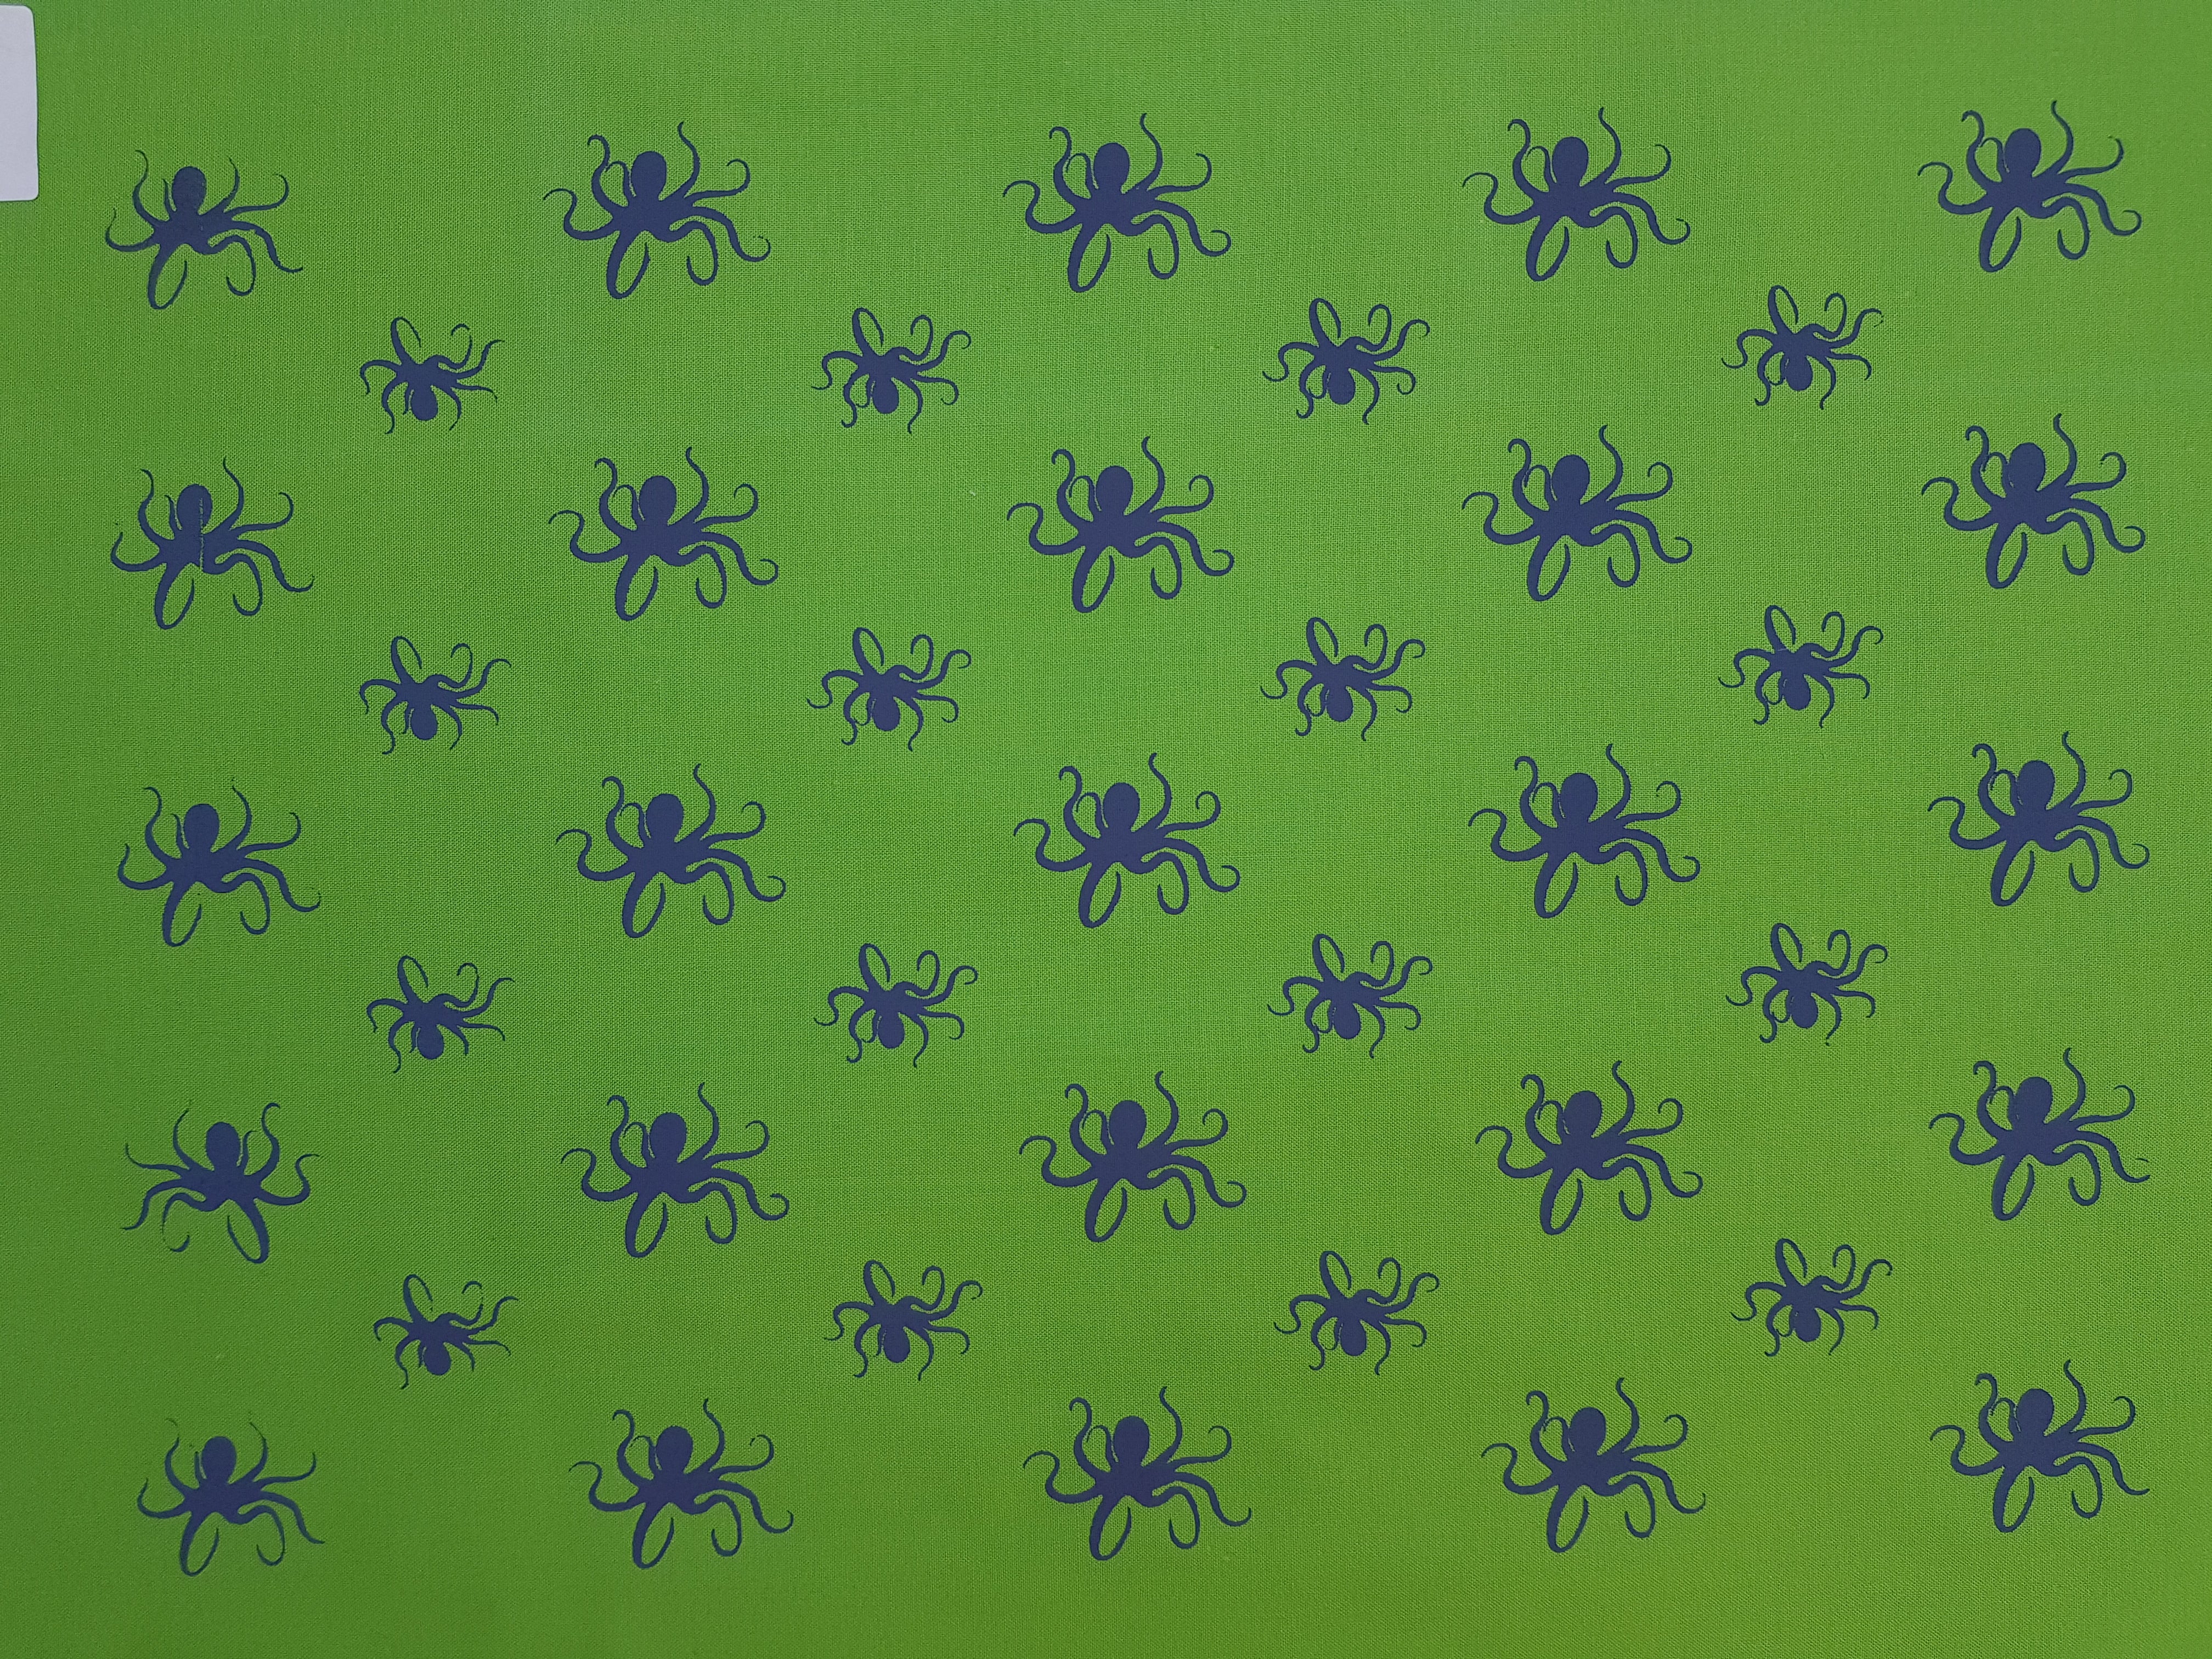 OCTOPUS - Screen Printed Octopus Fabric on Kona Cotton - Octopuses - Panels